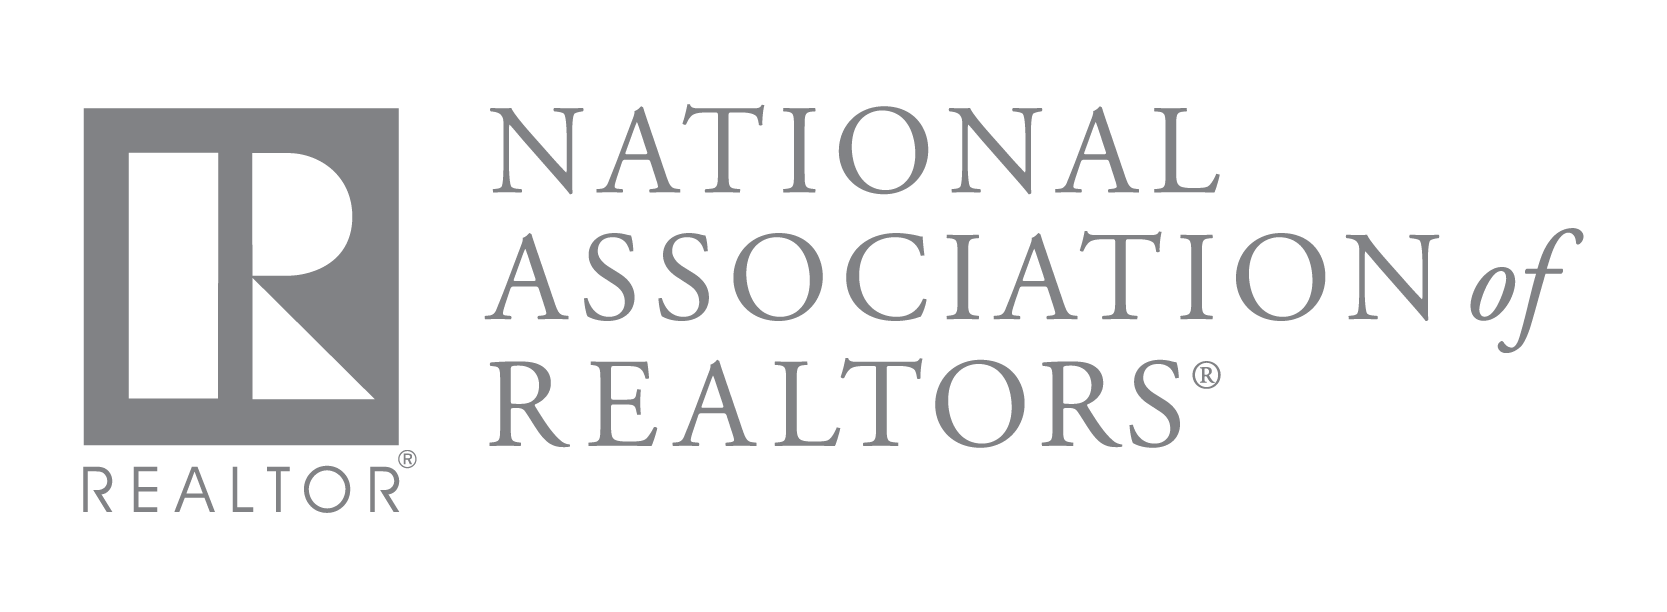 Jose-Garcia-Real-Estate-National-Association-of-Realtors